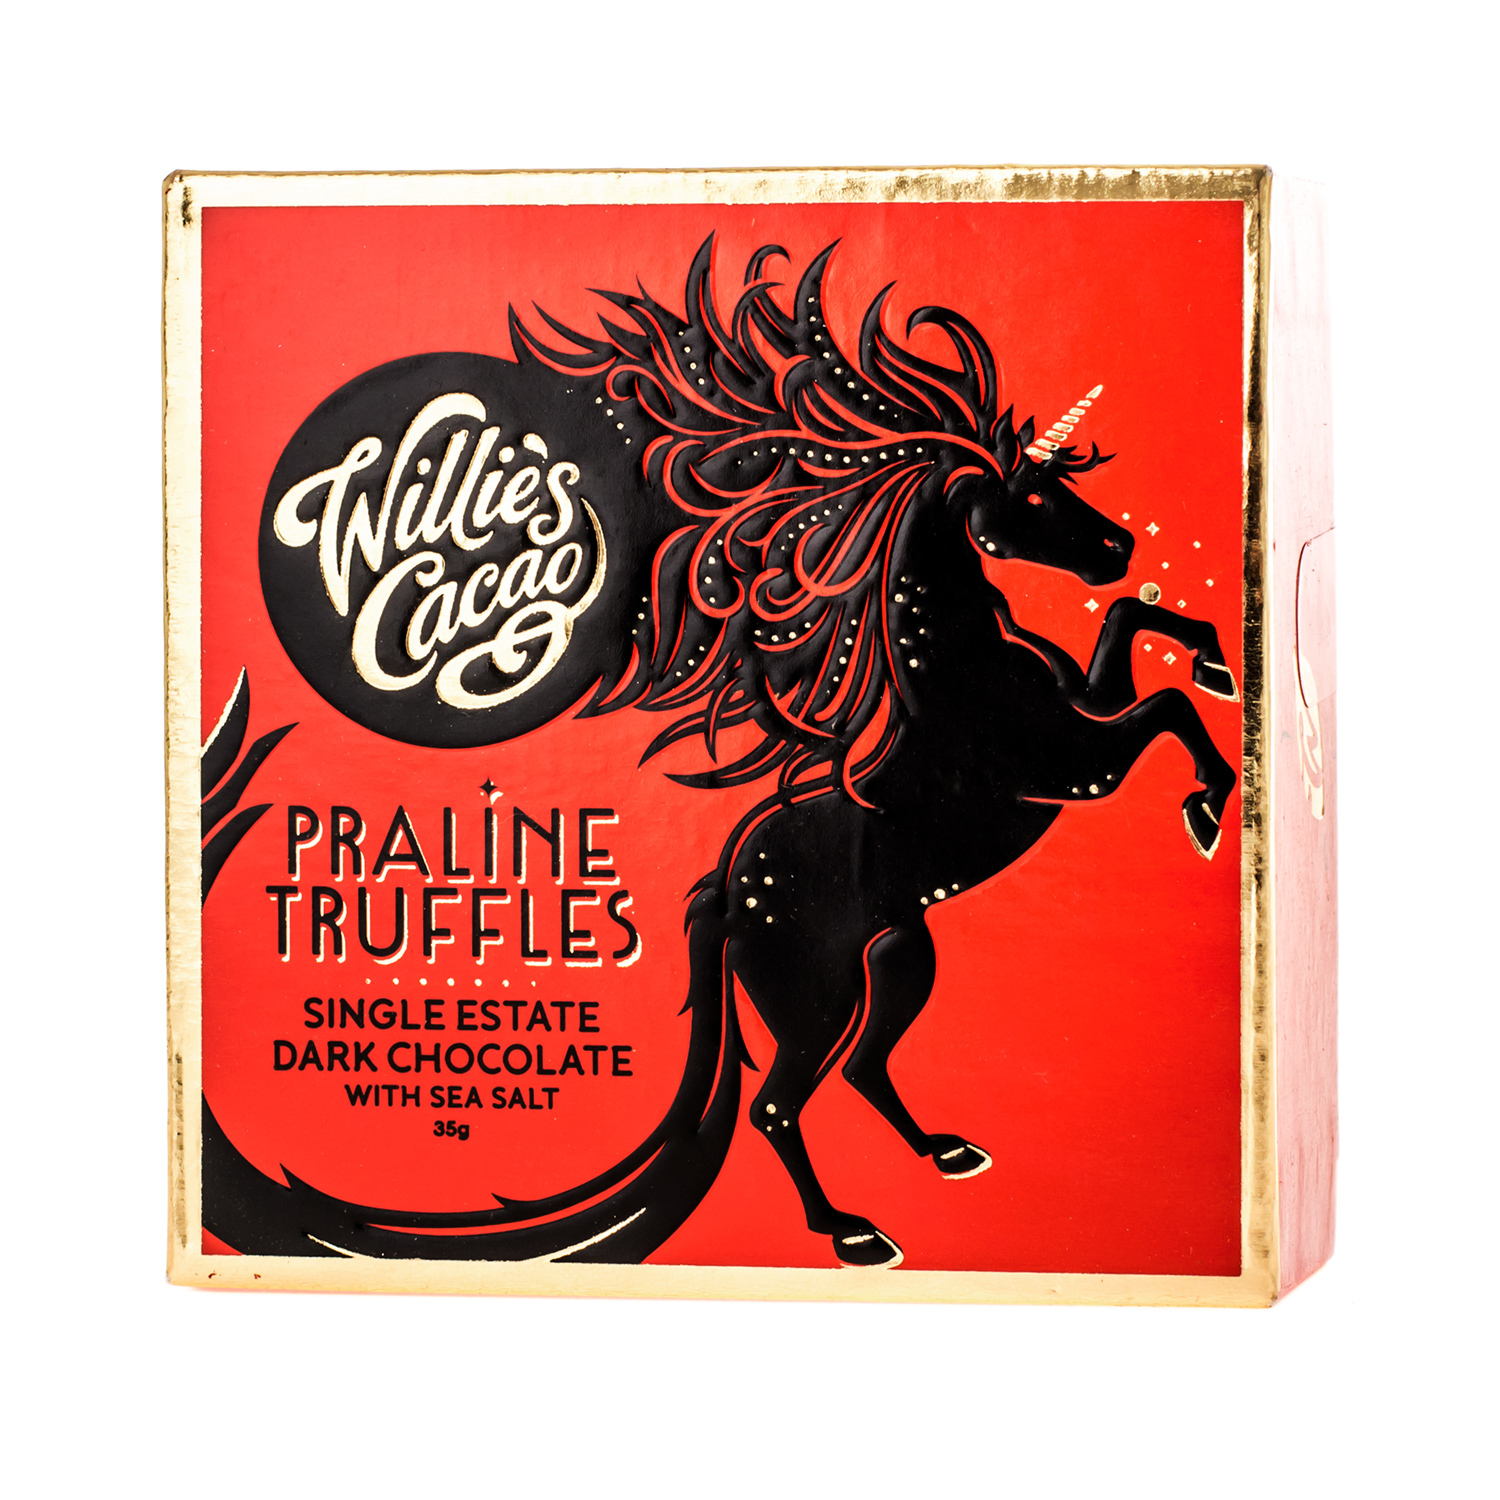 Willie's Cacao - Praline Truffles Dark Chocolate with Sea Salt 35g